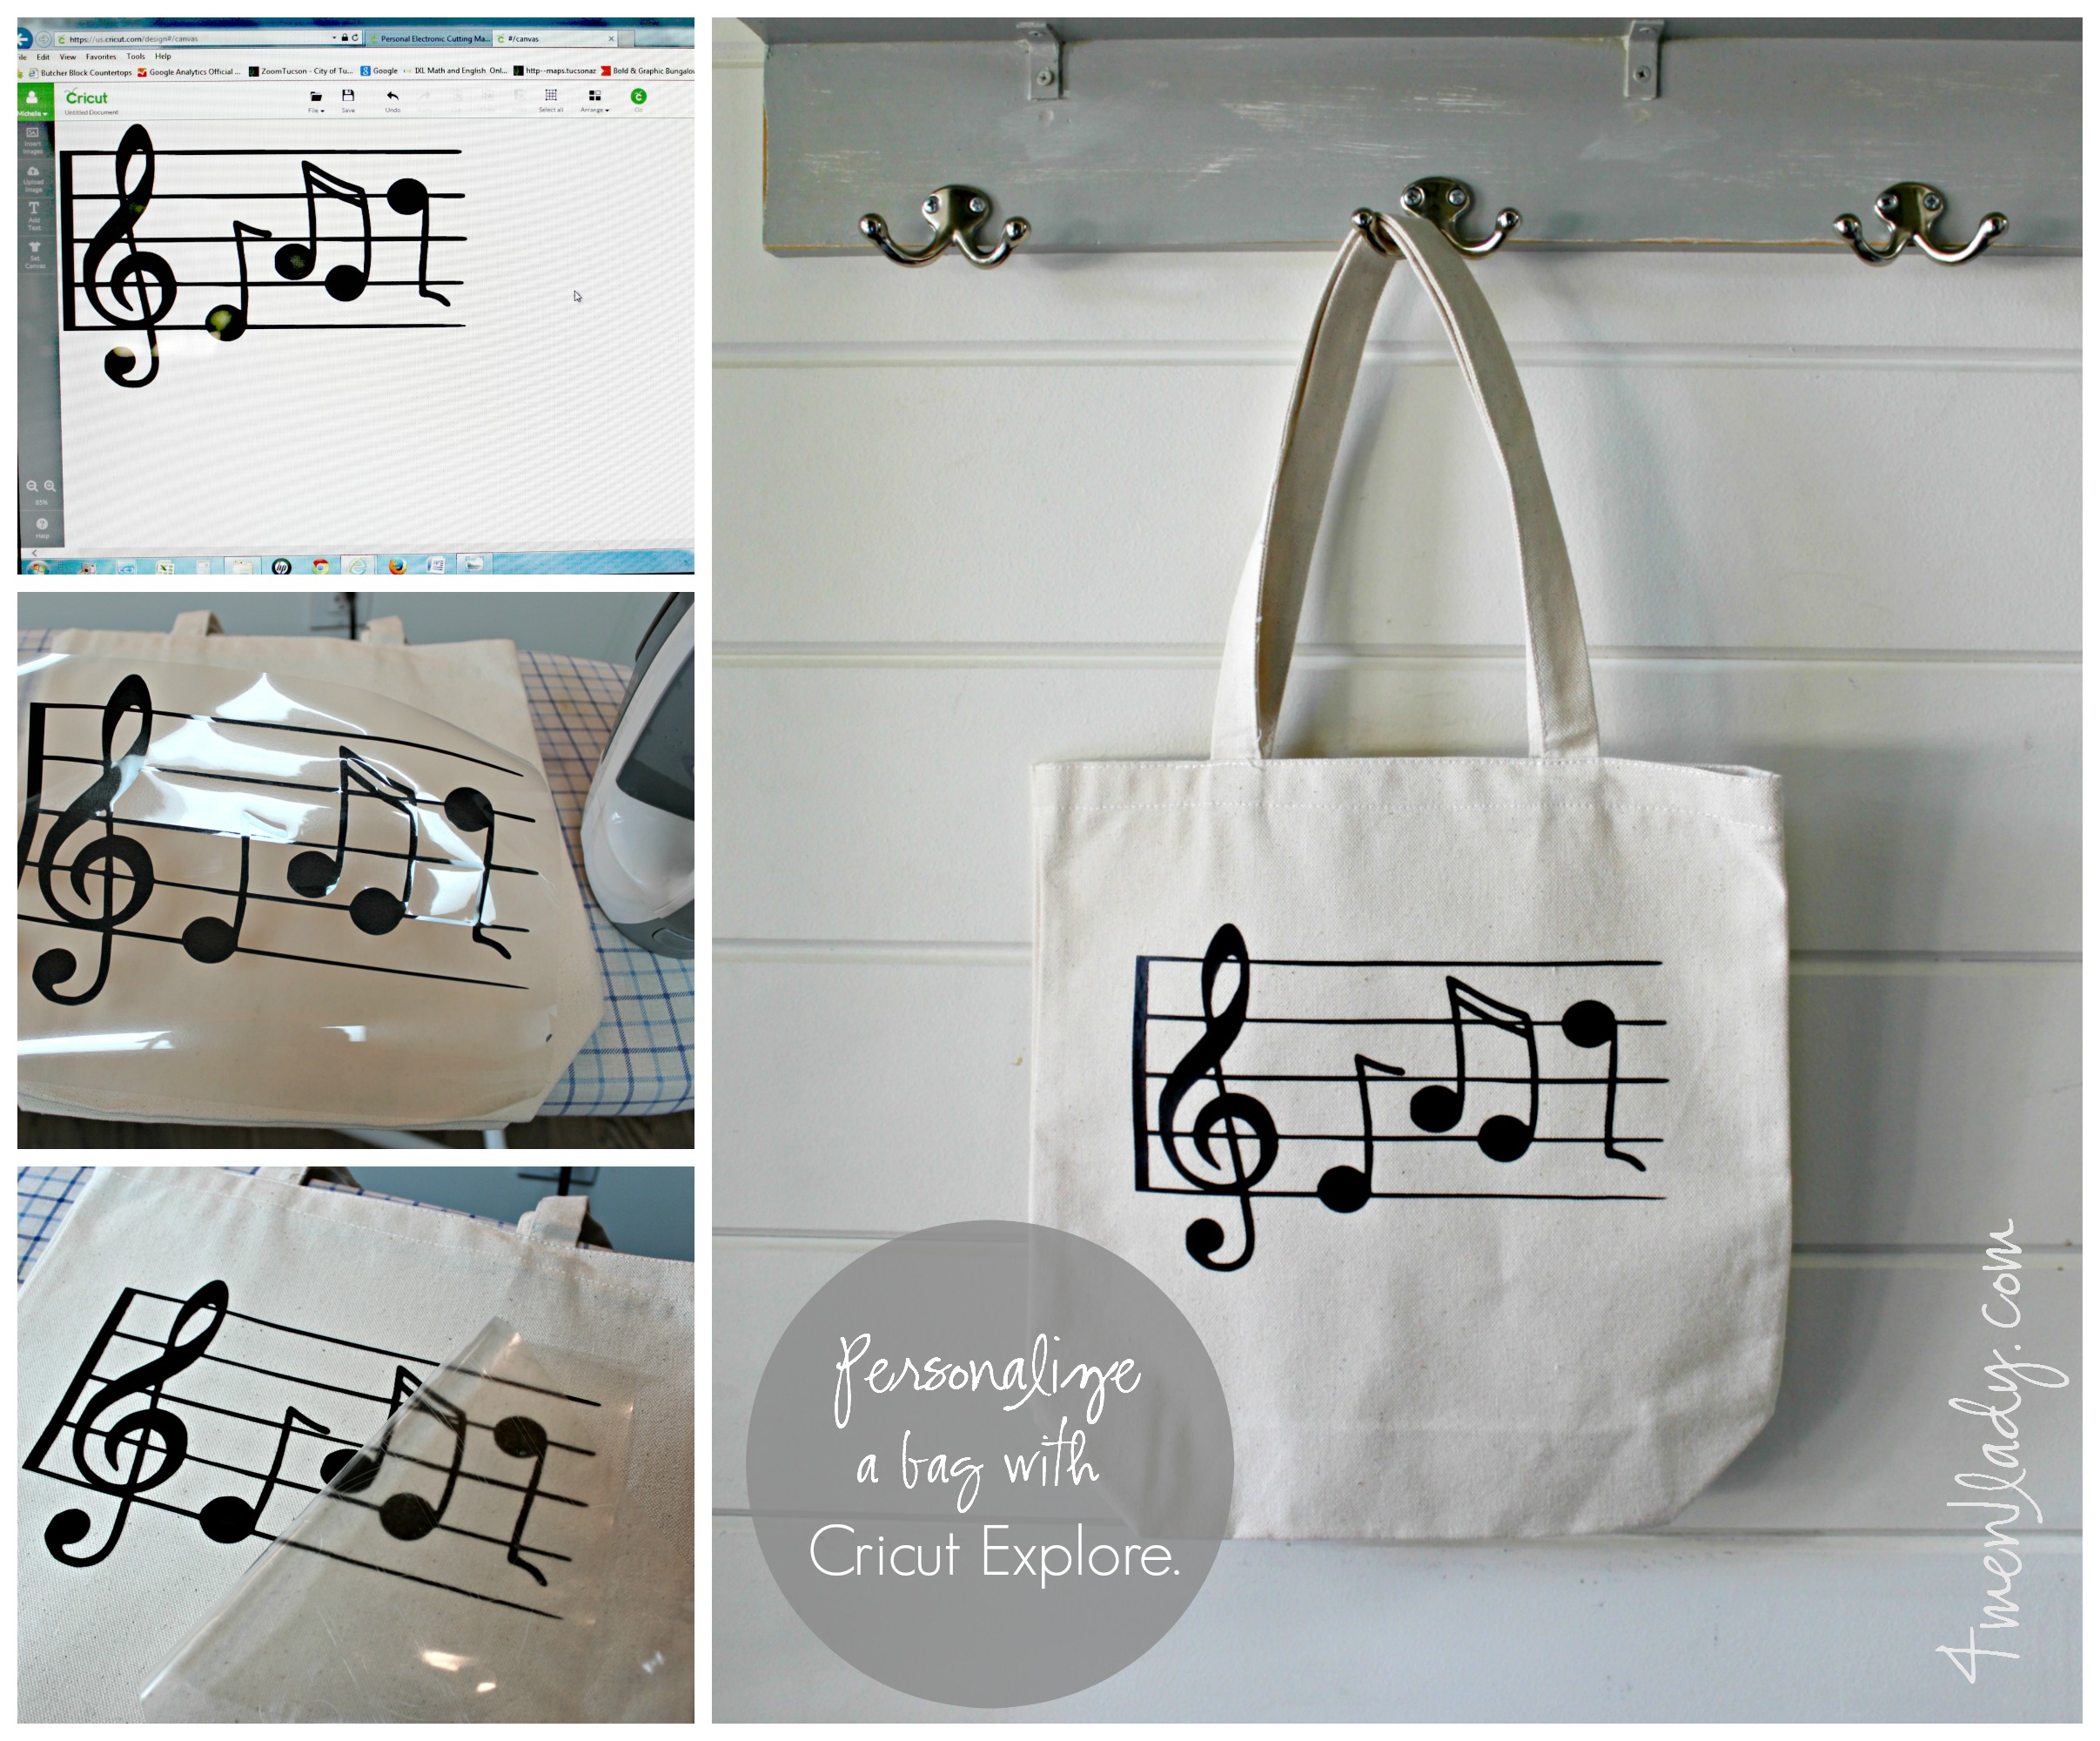 designer shopping bags - Google Search